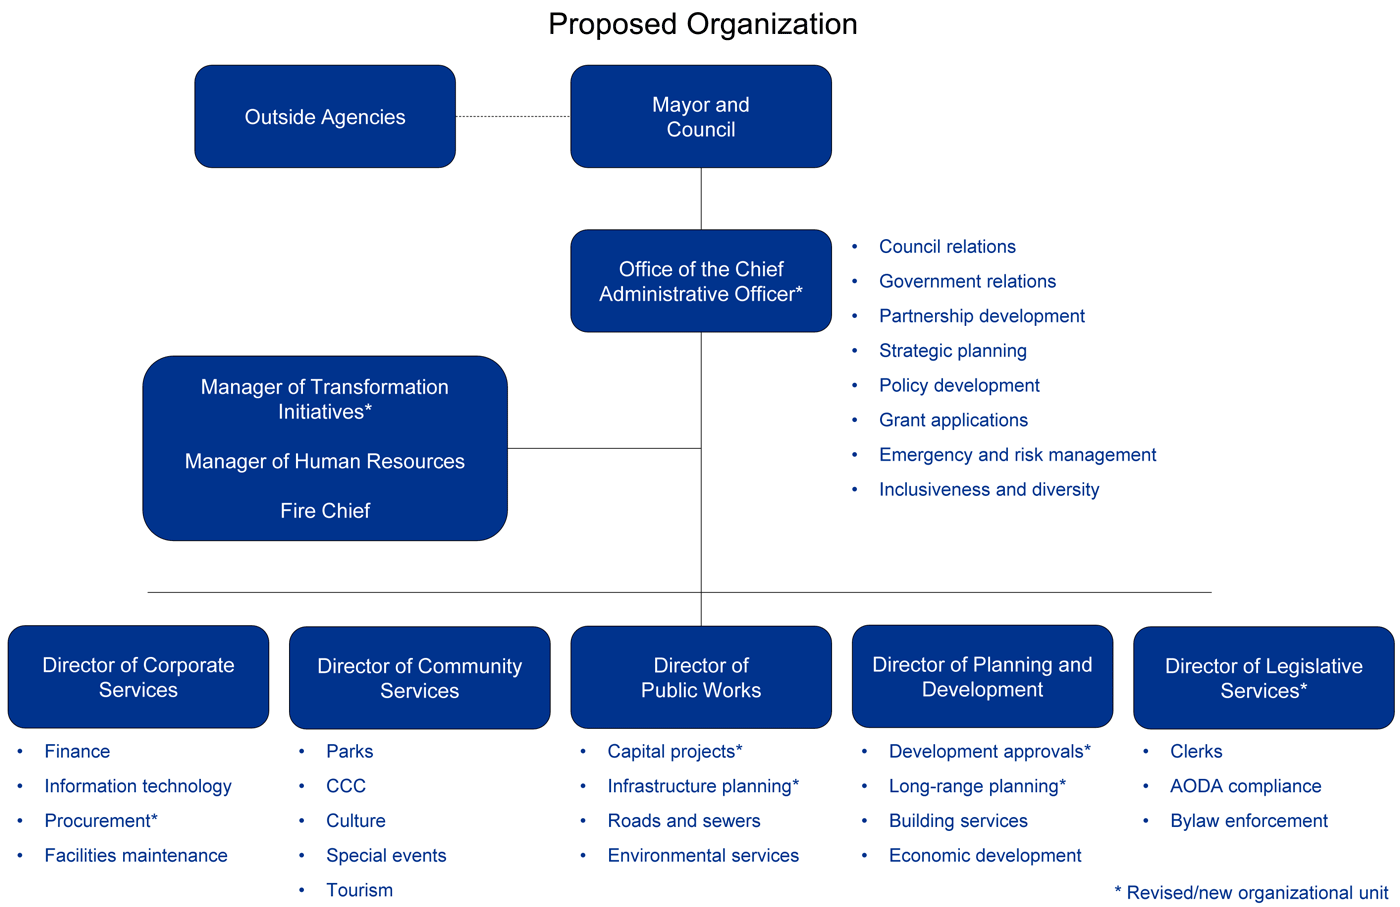 Proposed Organization